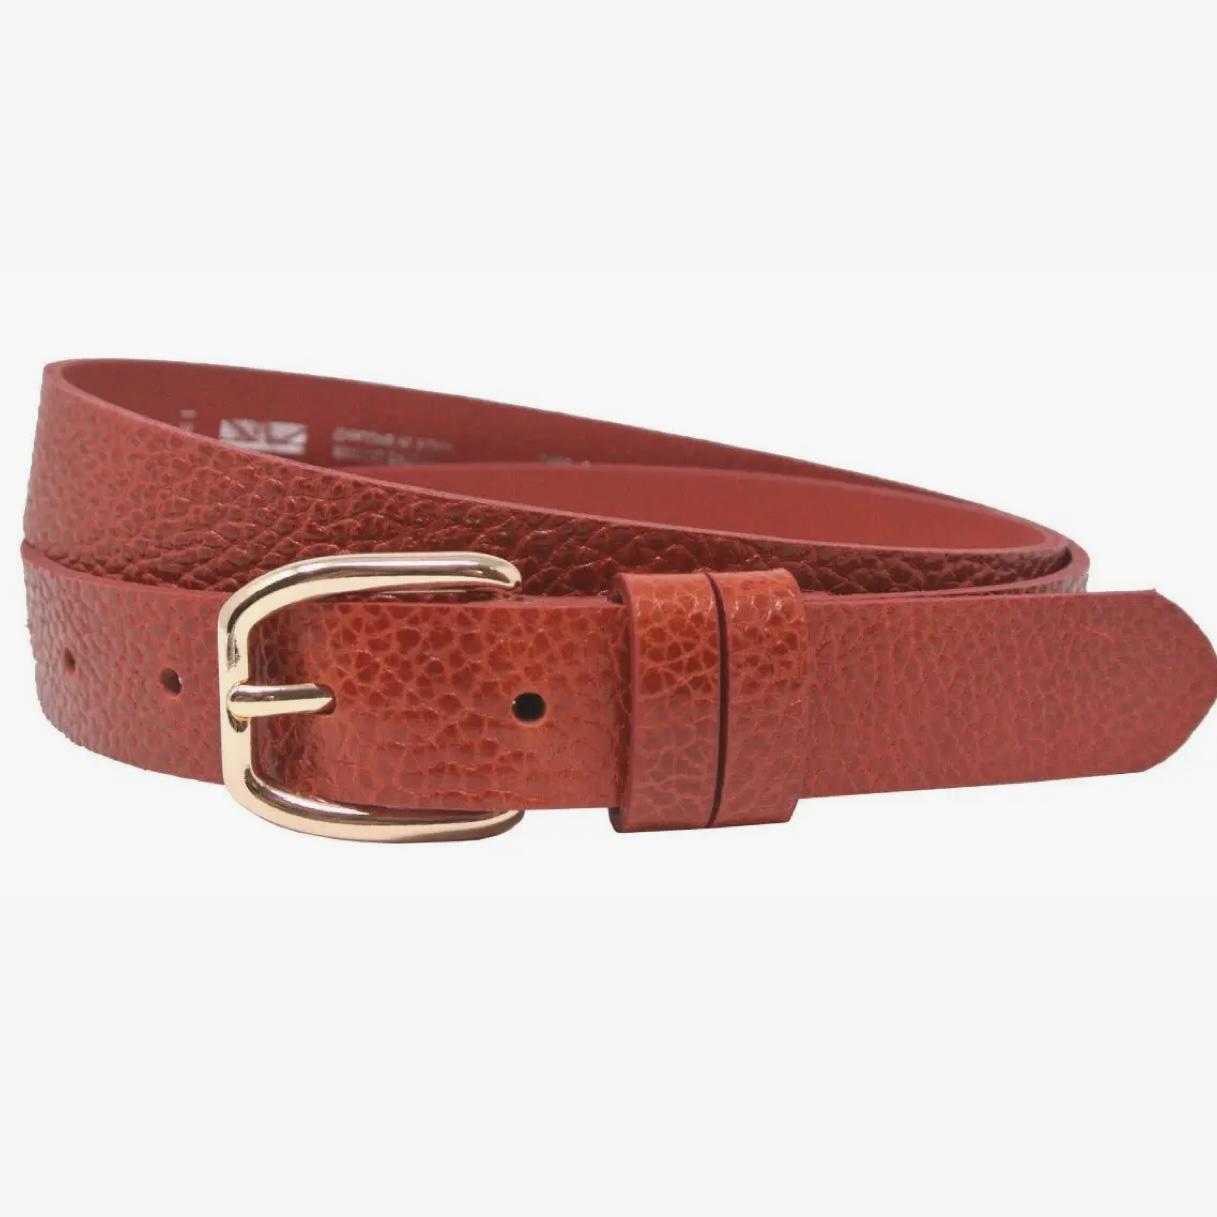 The British Belt Company Handmade Leather Tamsin Belt - Poppy Red